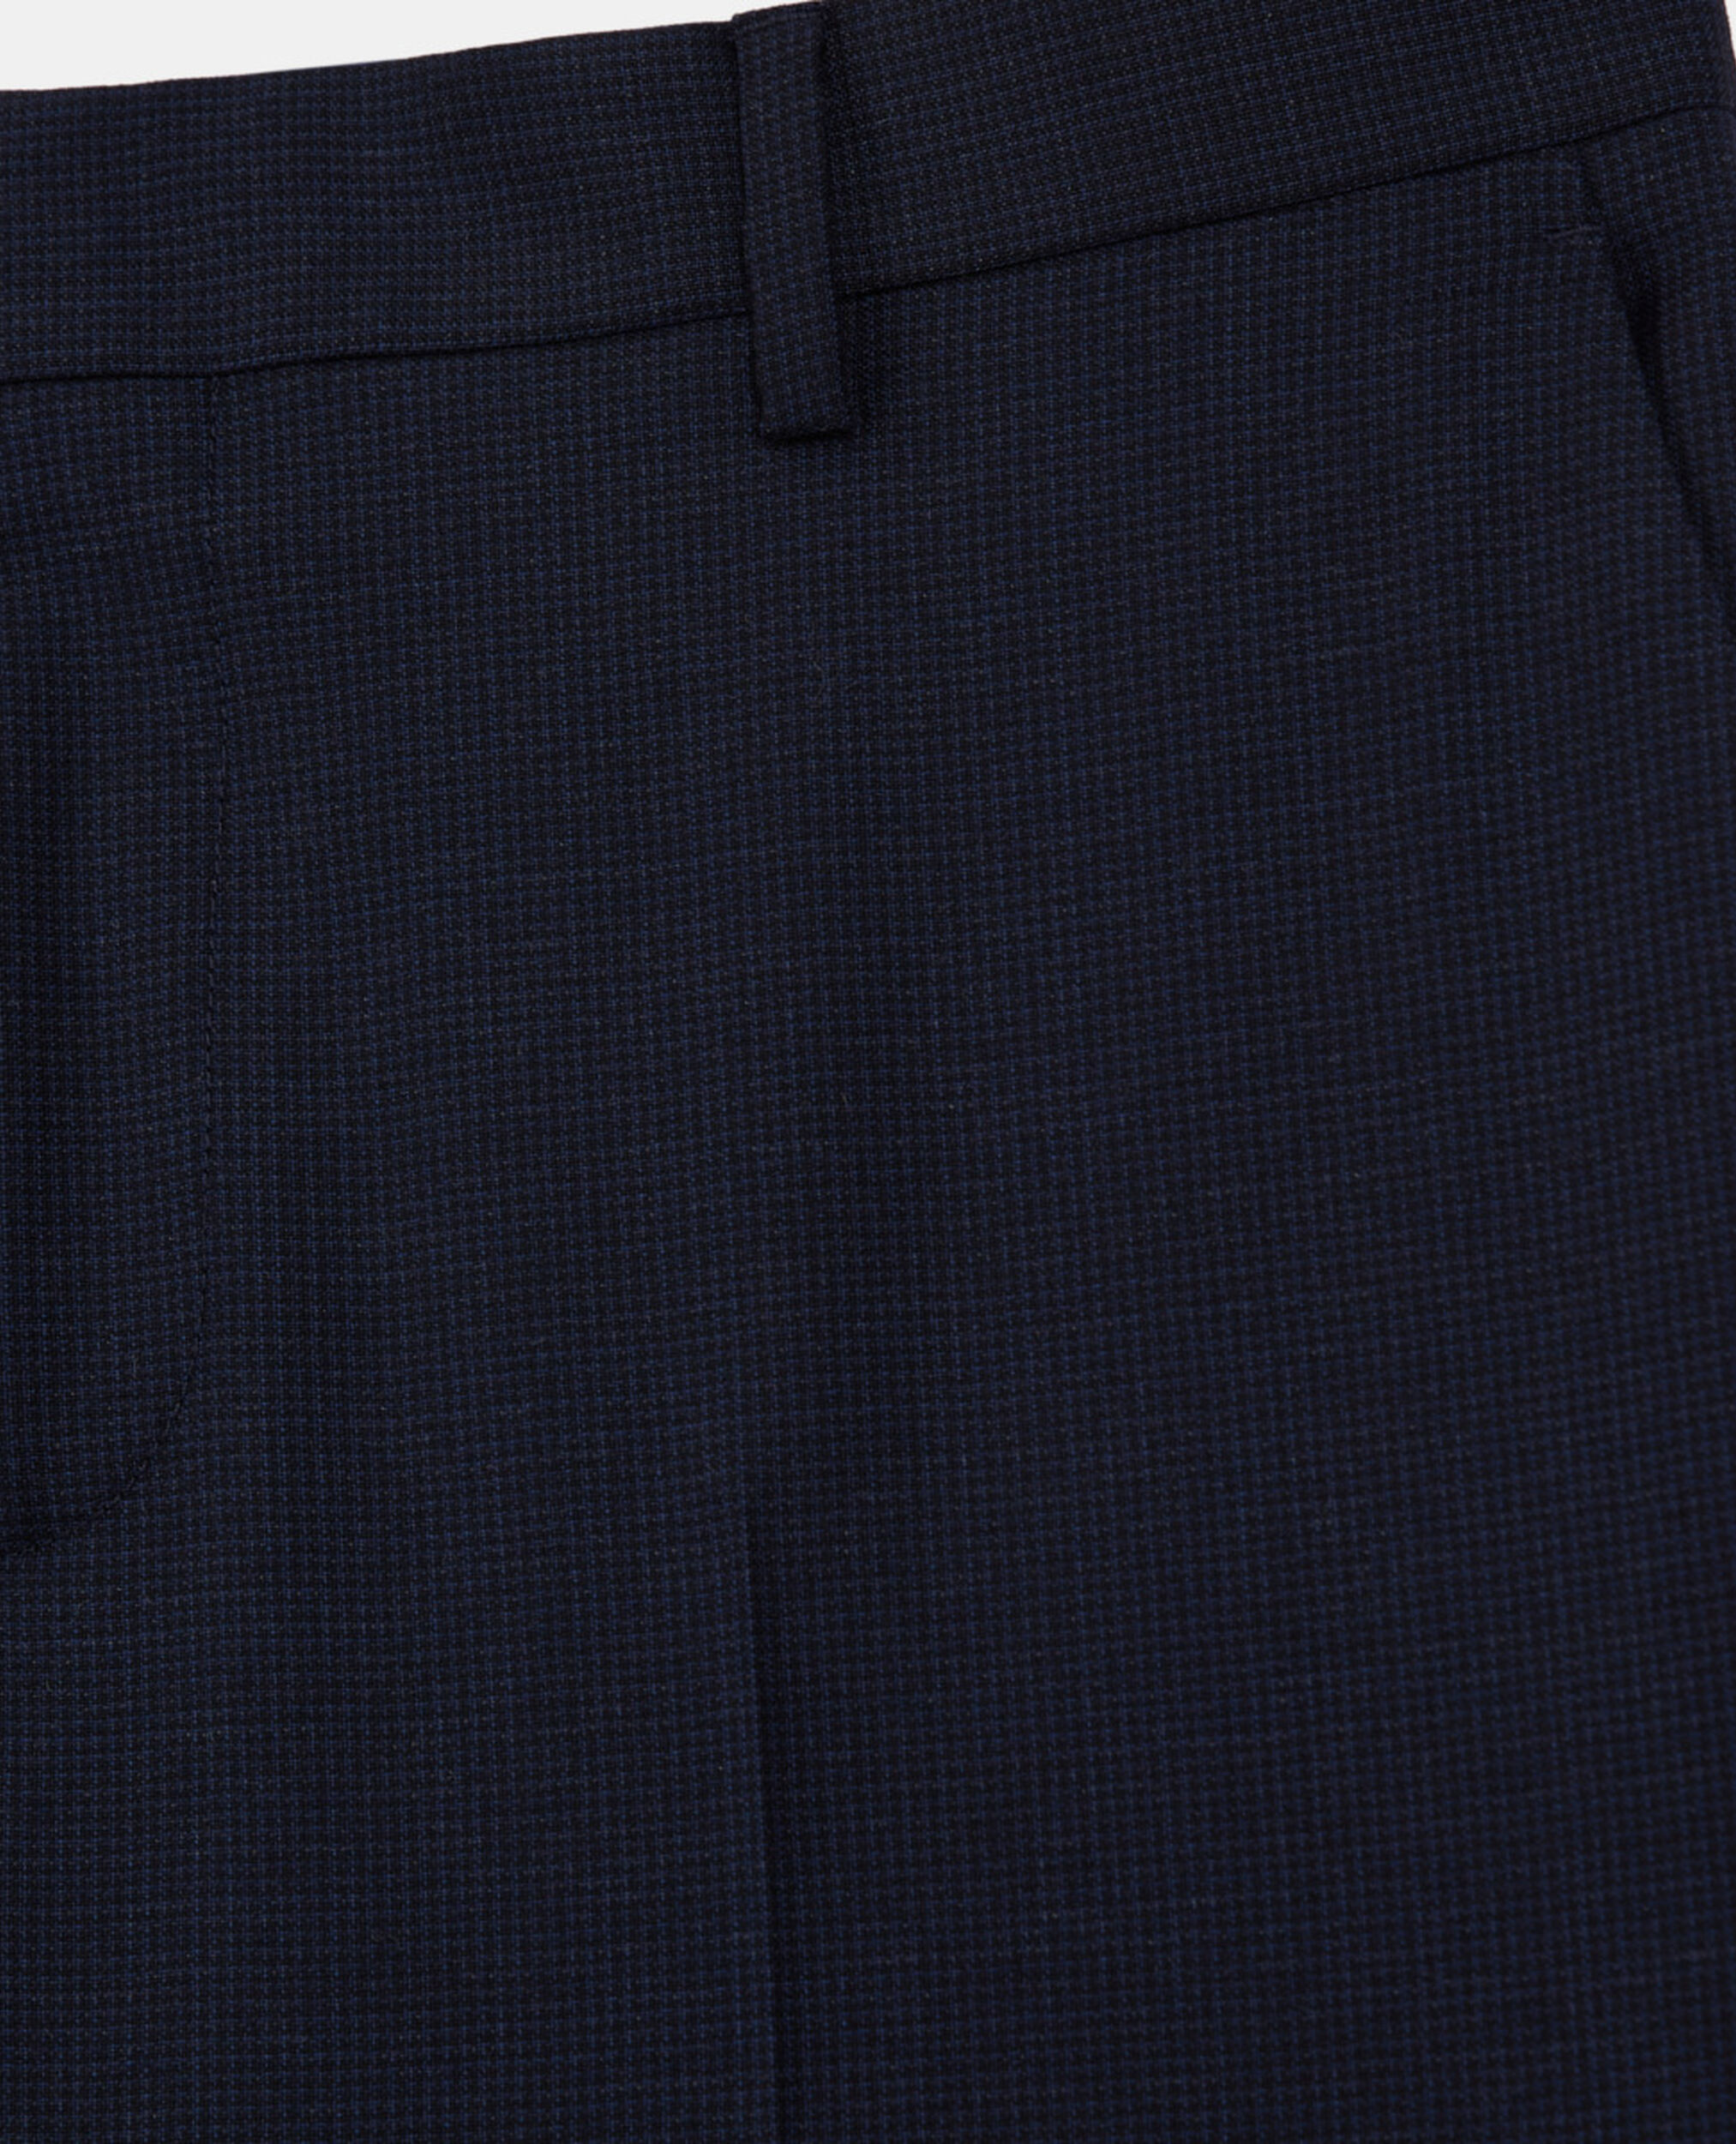 Pantalón traje lana azul marino, NAVY, hi-res image number null